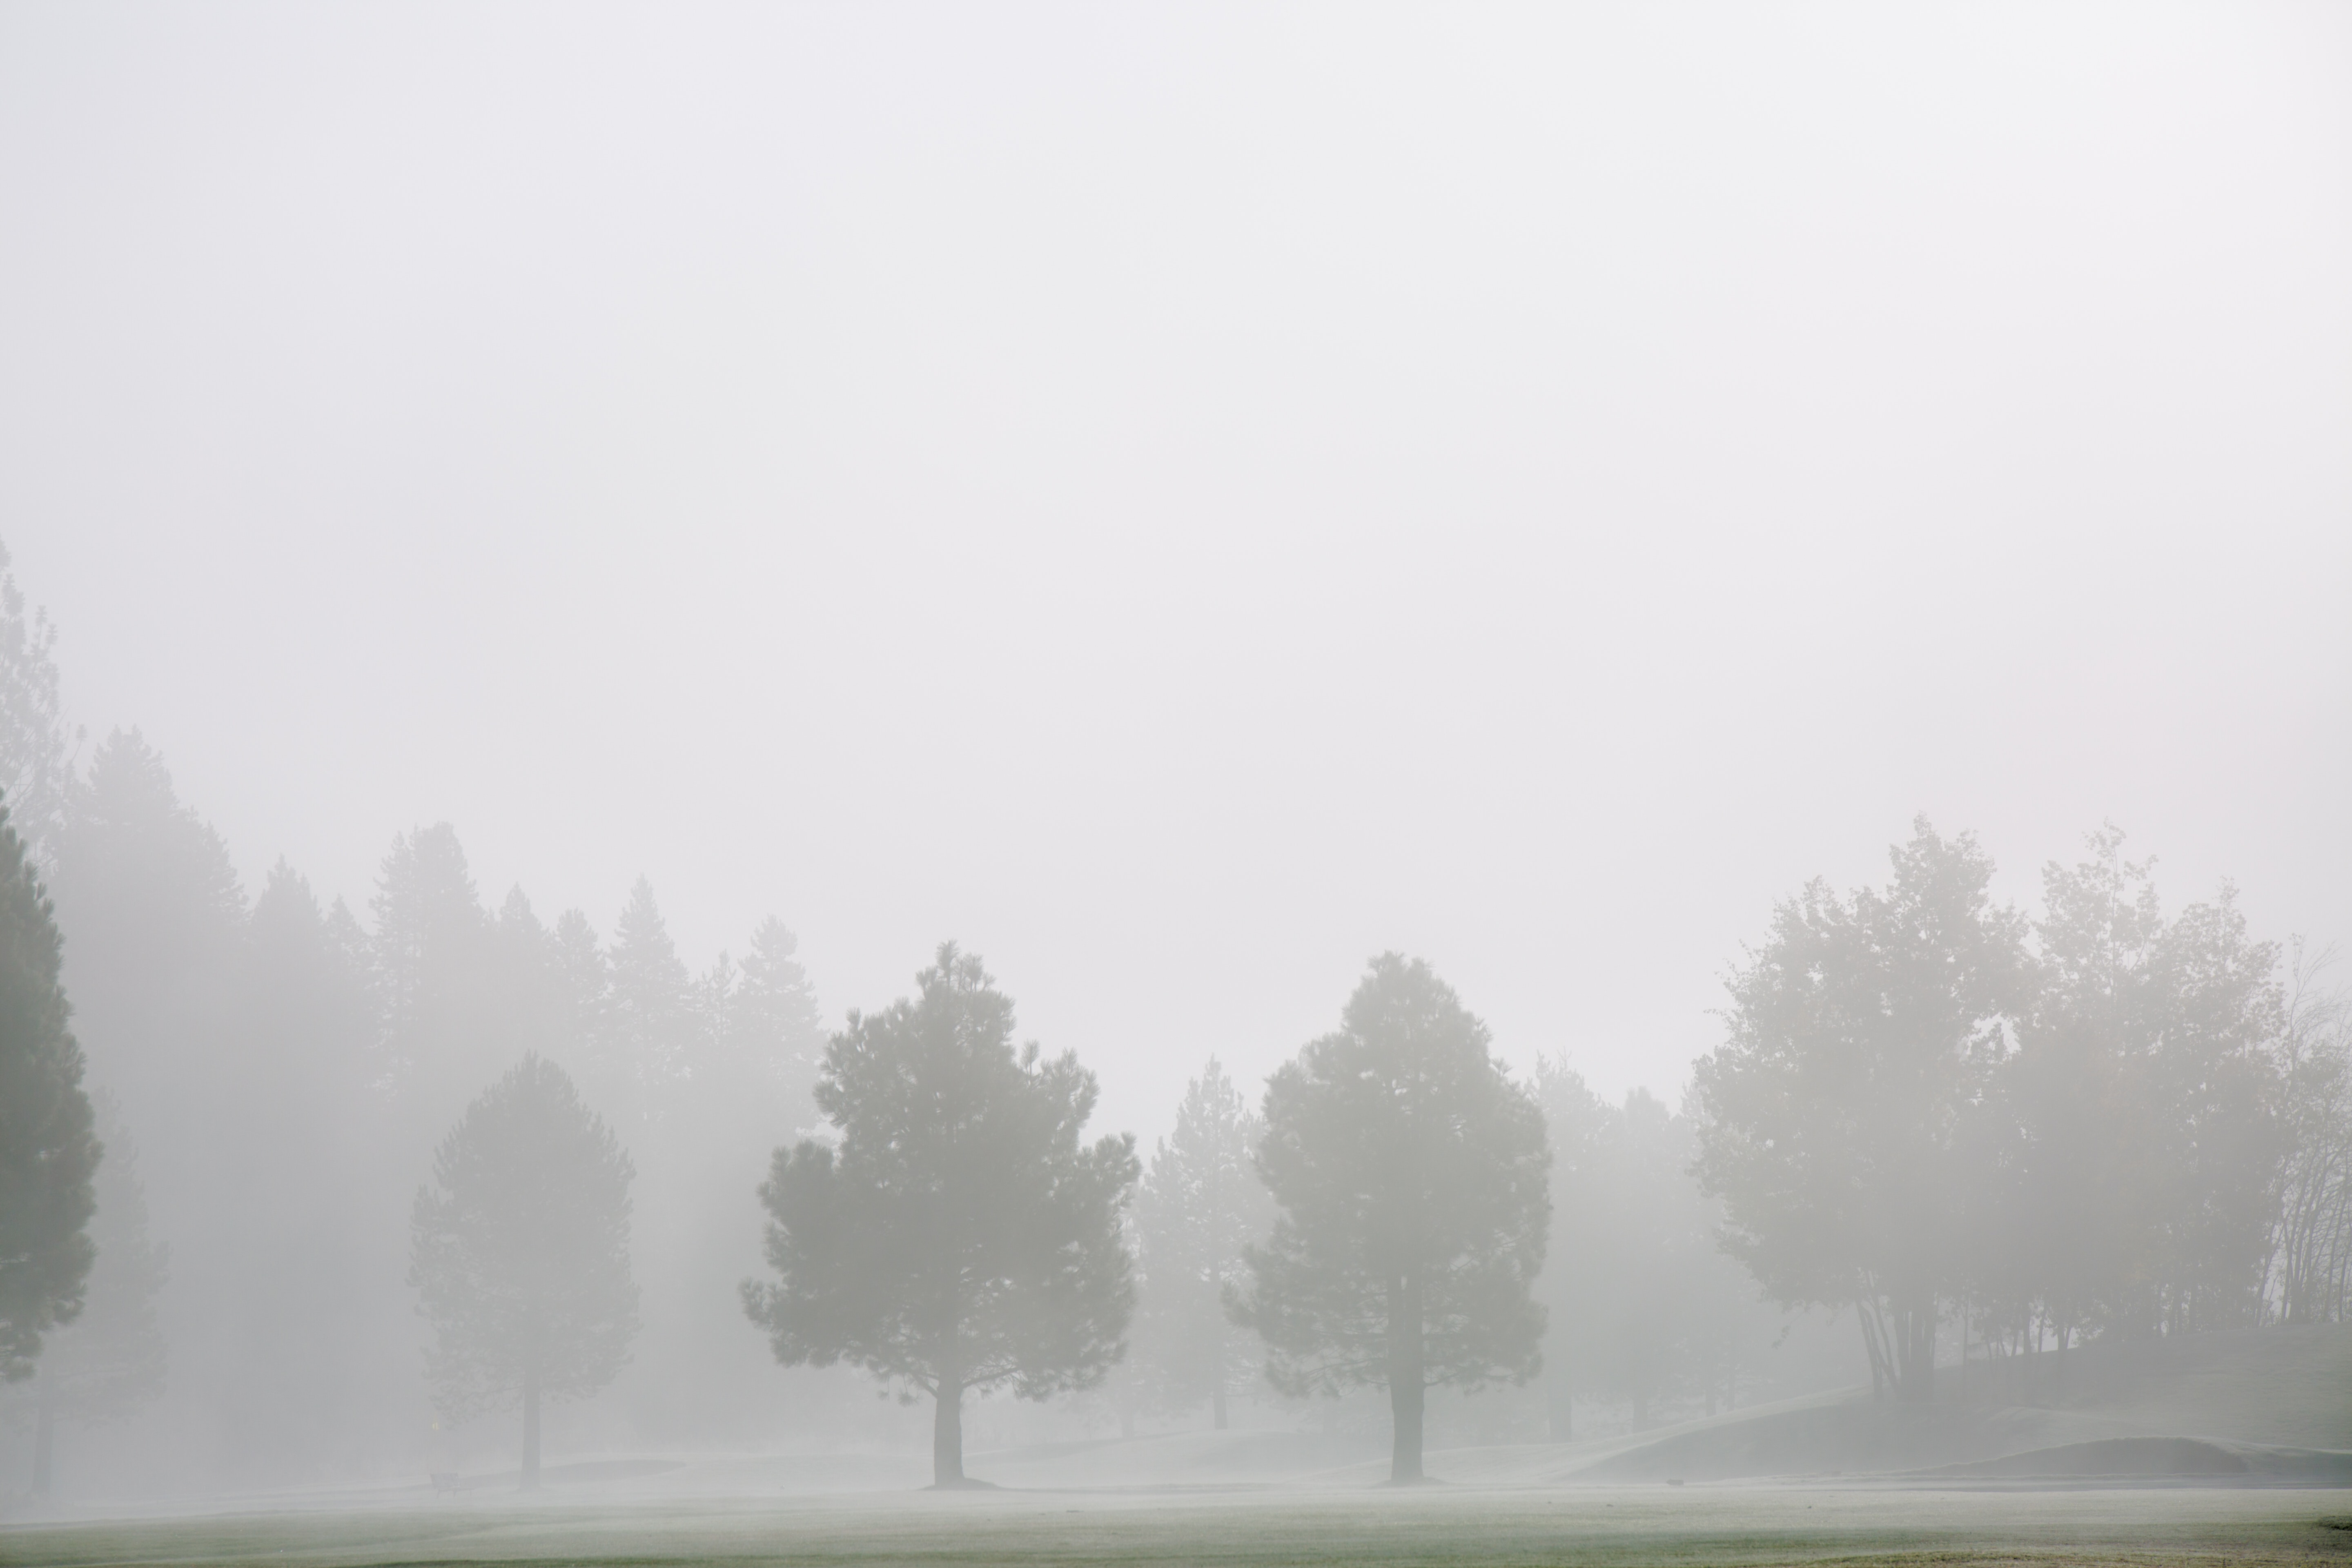 Most mornings. Минималистический туман. Пейзаж Минимализм туман ярко. Туман Alpha. Фон за окном холодный туман.